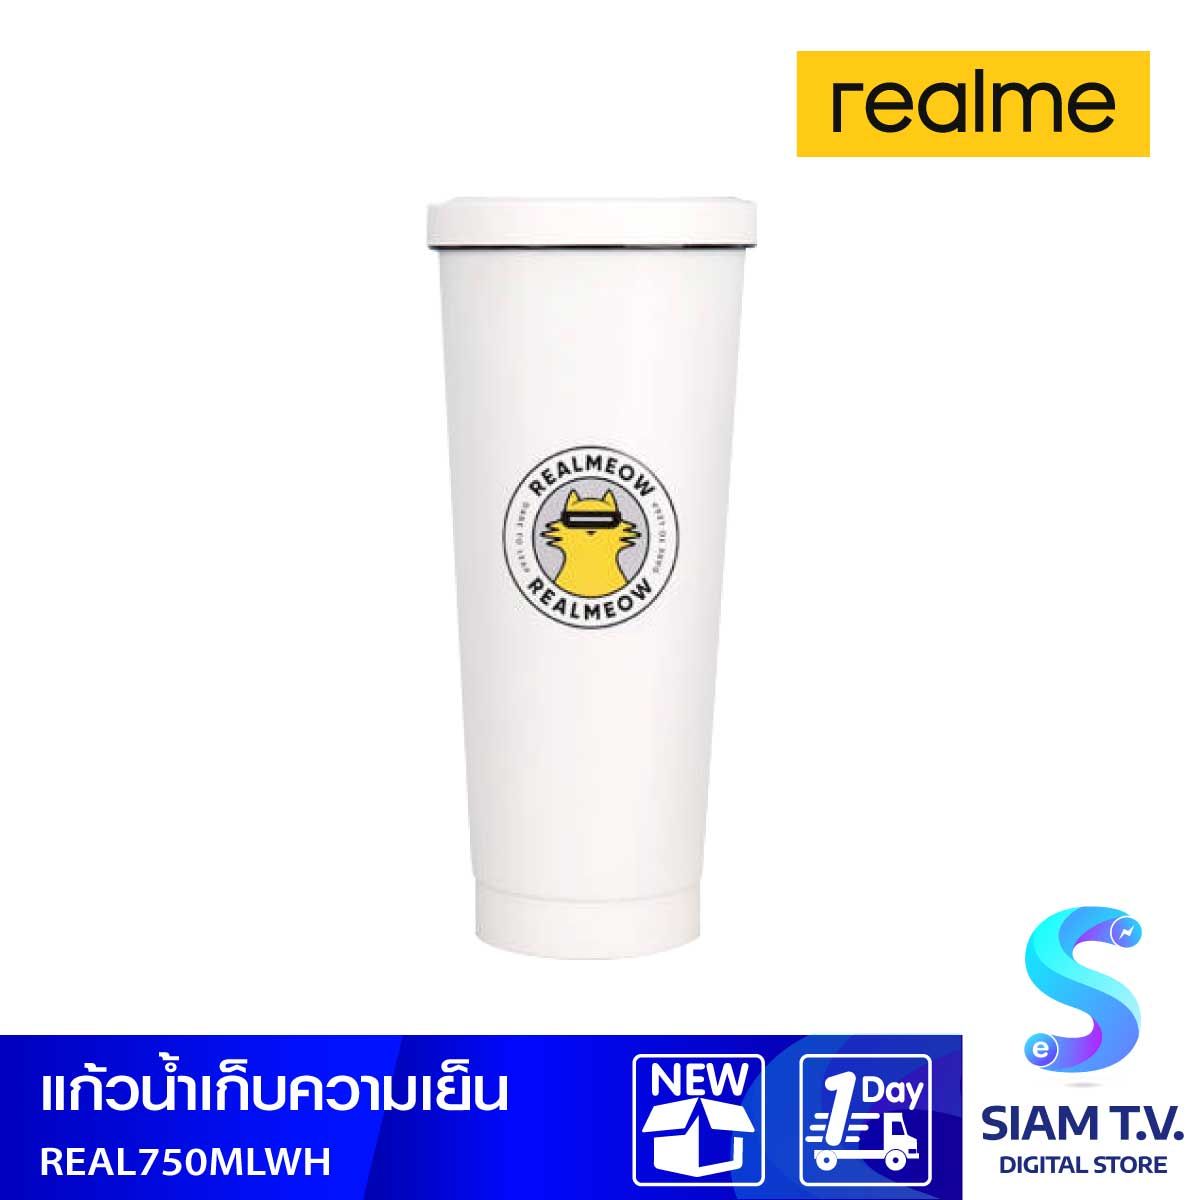 Realme แก้วน้ำเก็บความเย็นRealMeow White/750ml